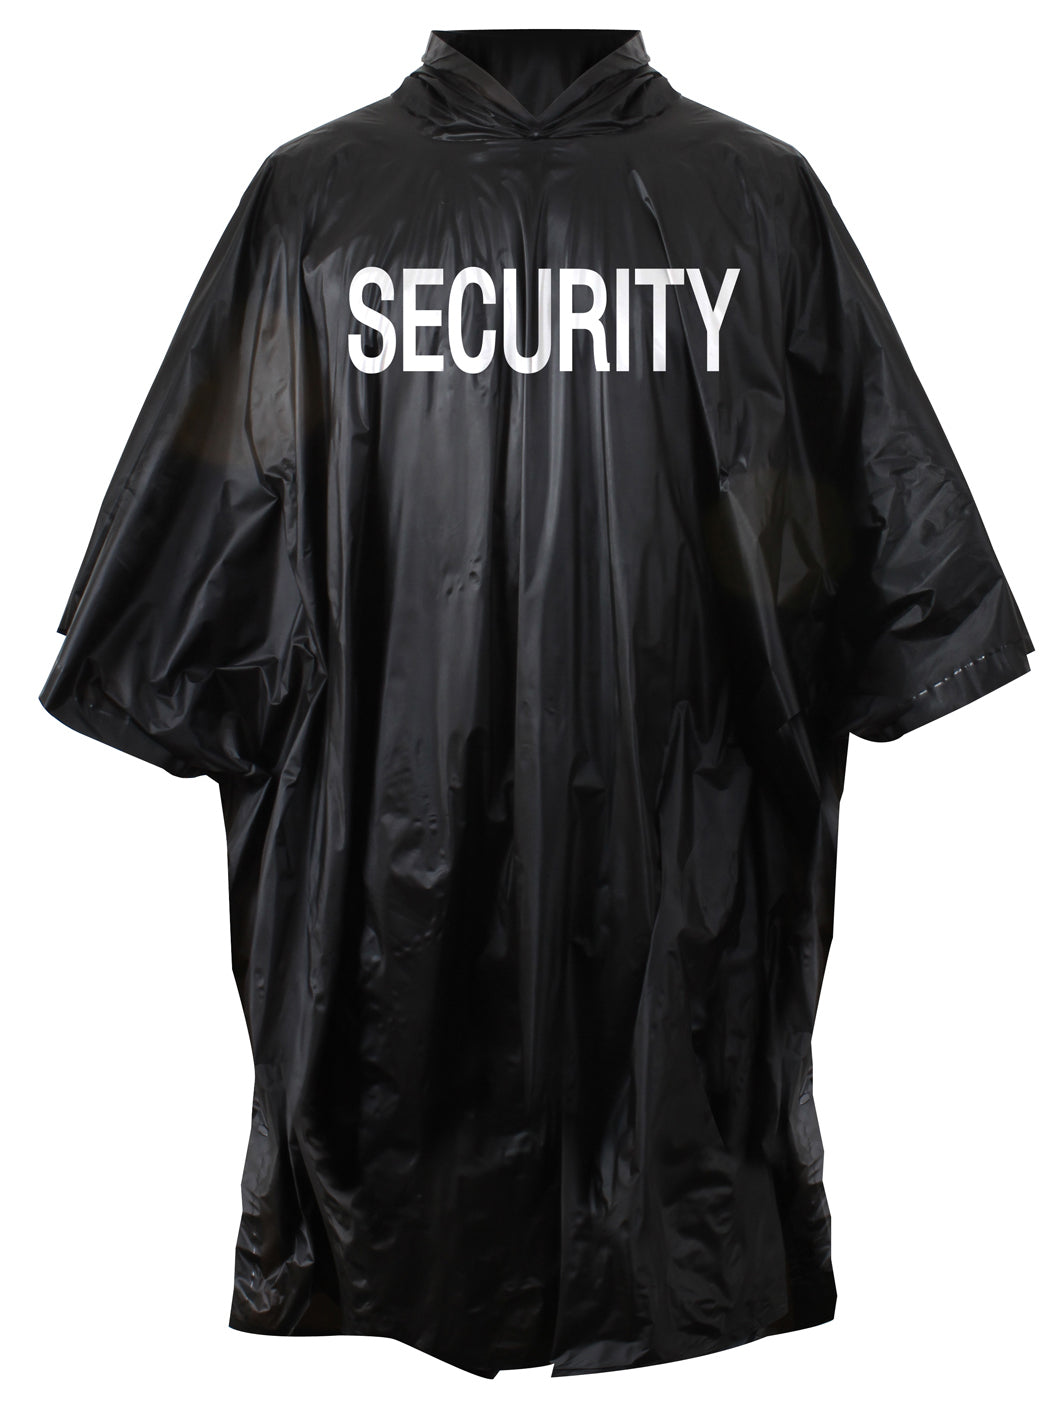 [Public Safety] Vinyl Security Rain Ponchos Security White - Black